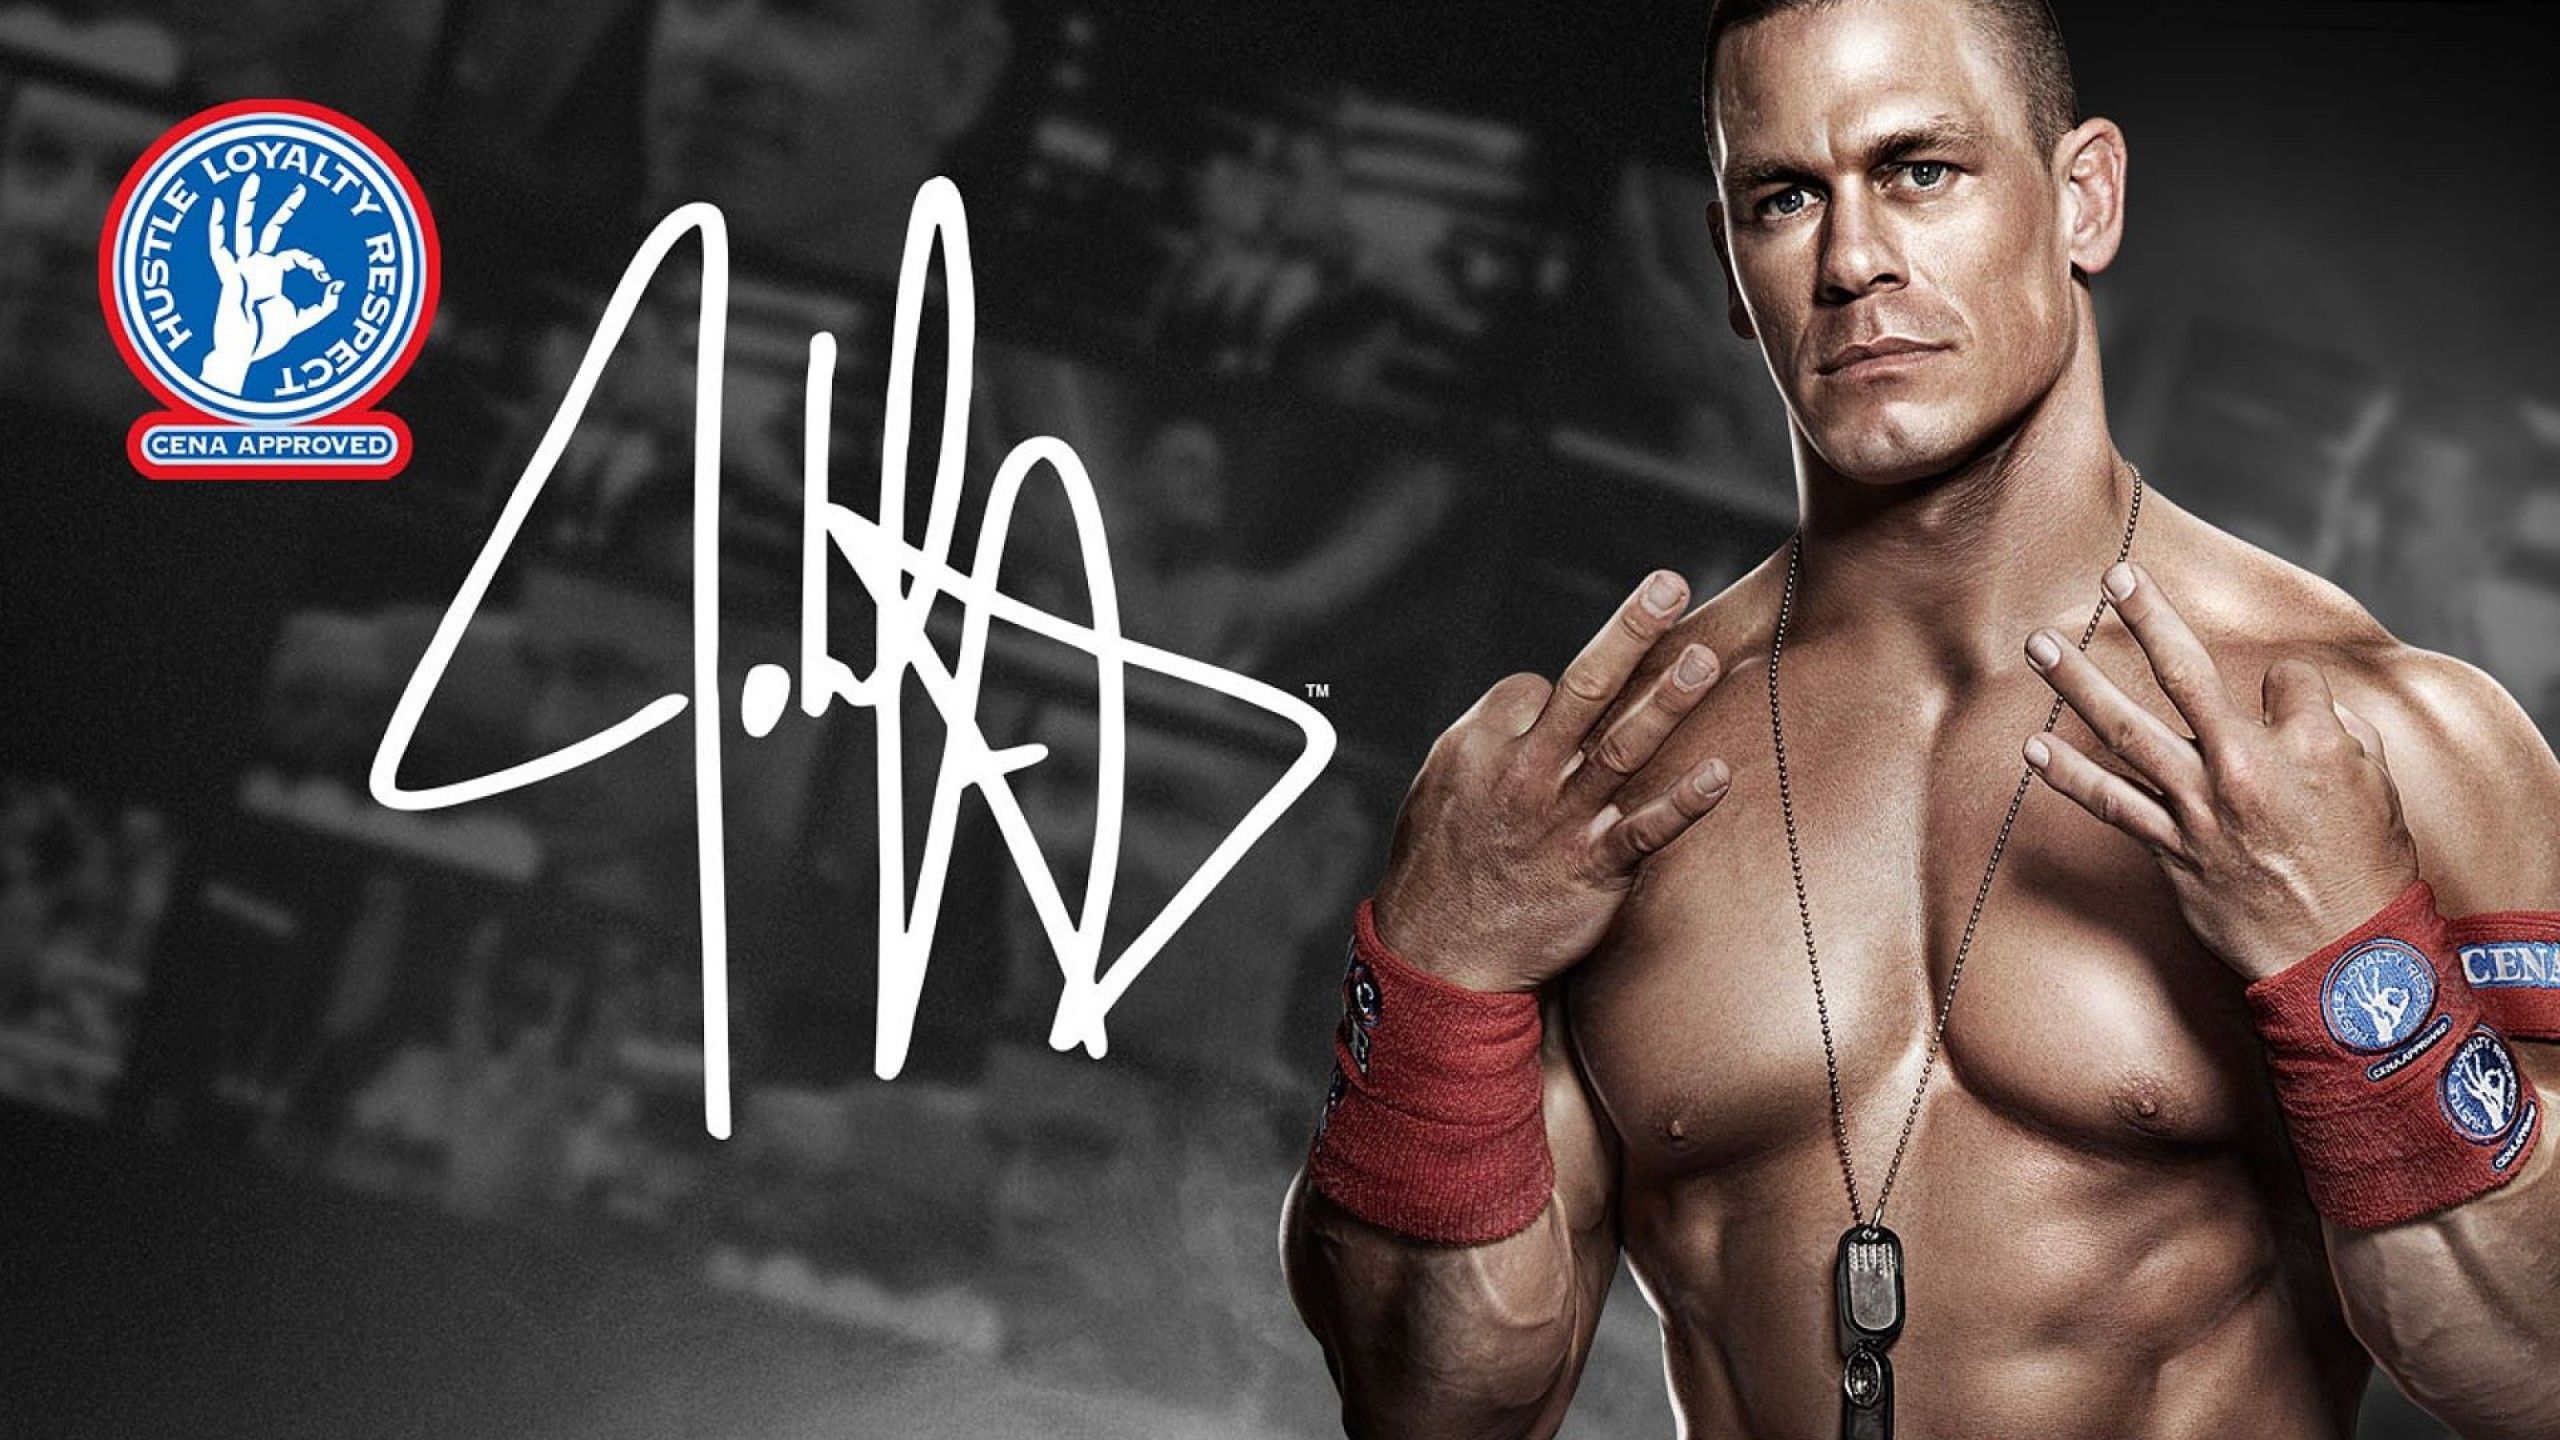 WWE John Cena Signature Desktop Background HD 2560x1440 deskbg.com